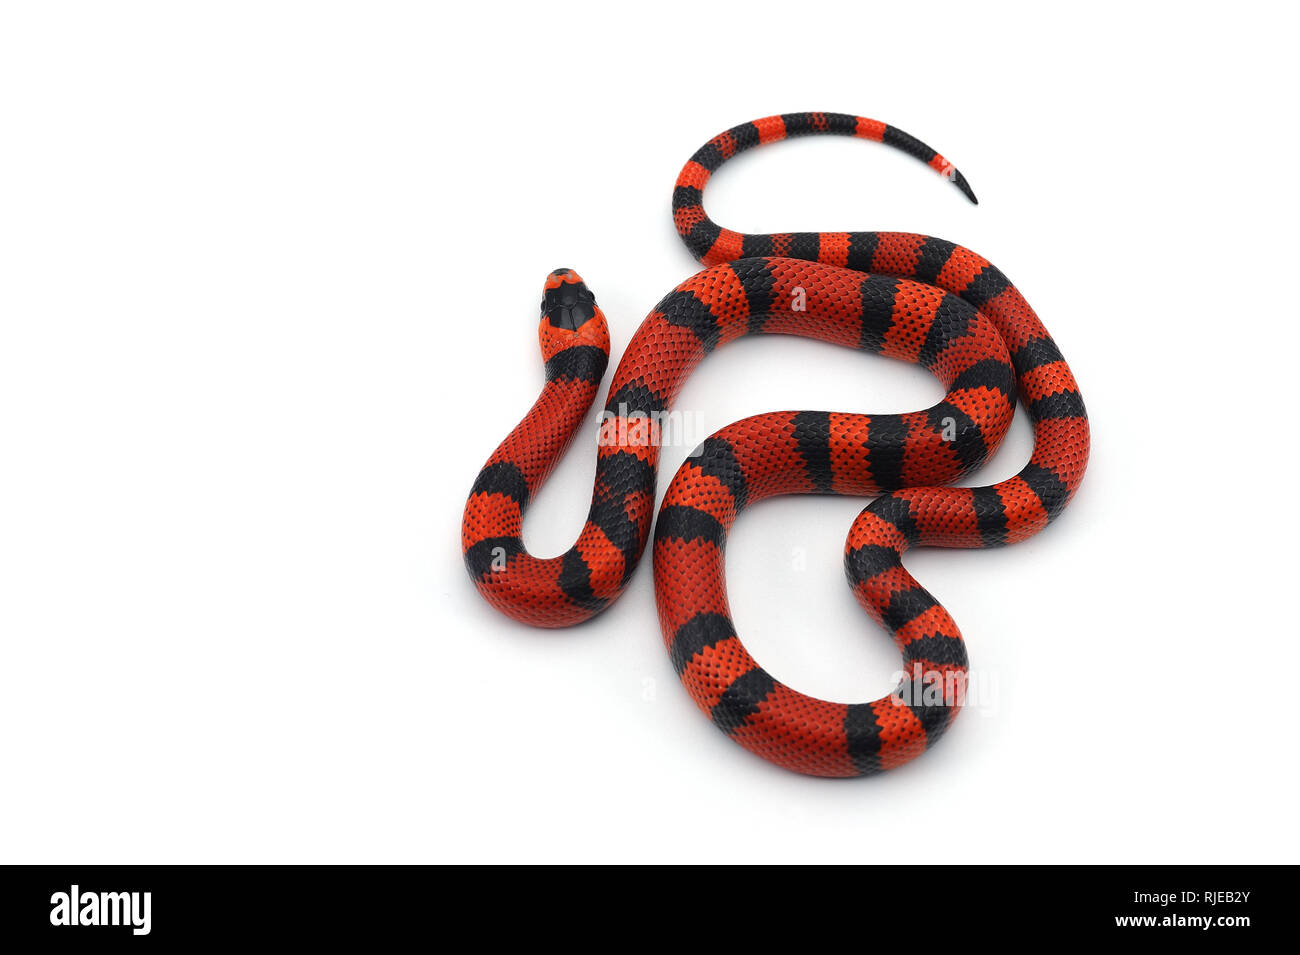 Red-black Milk snake isolated on white background Stock Photo